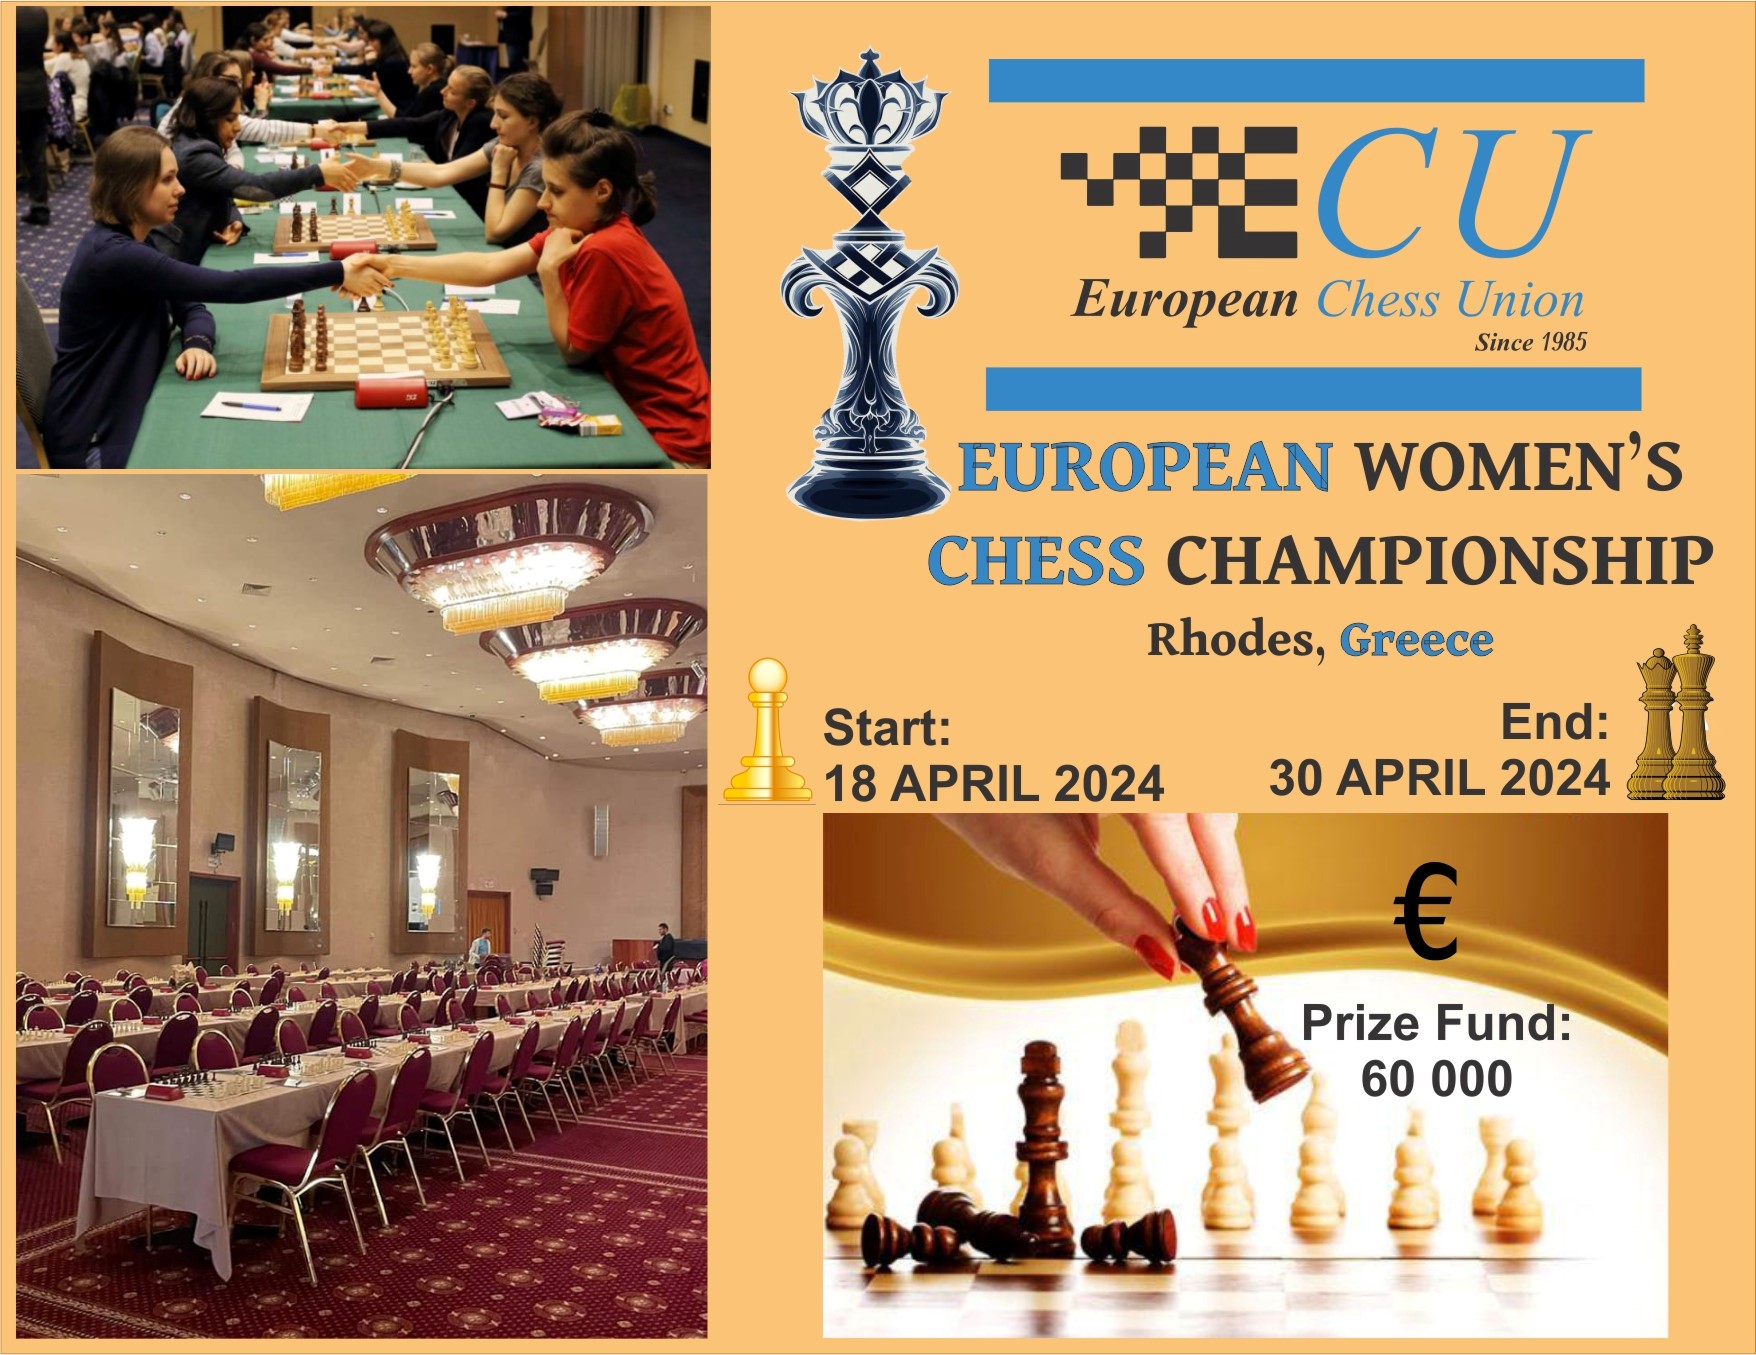 Kampionati individual Evropian për femra